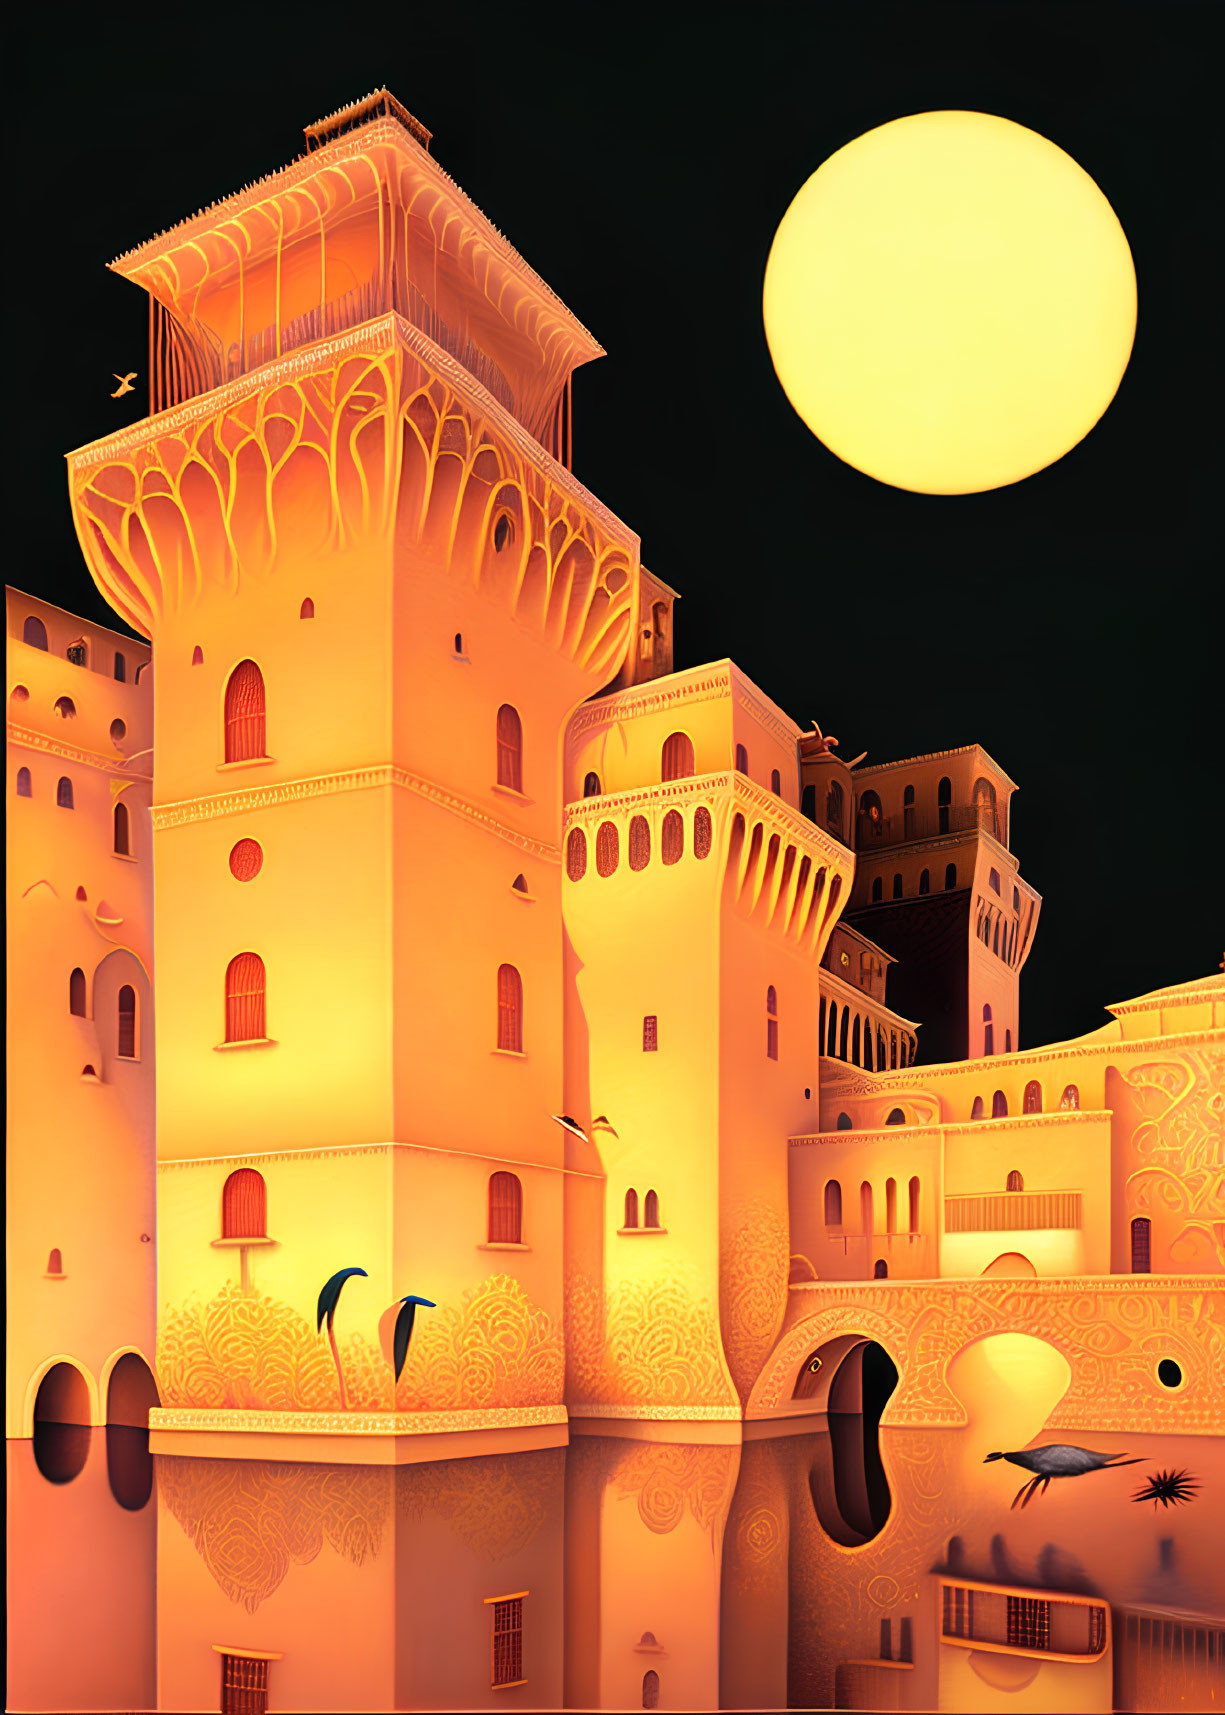 Fantasy castle illustration under yellow moon in dark sky